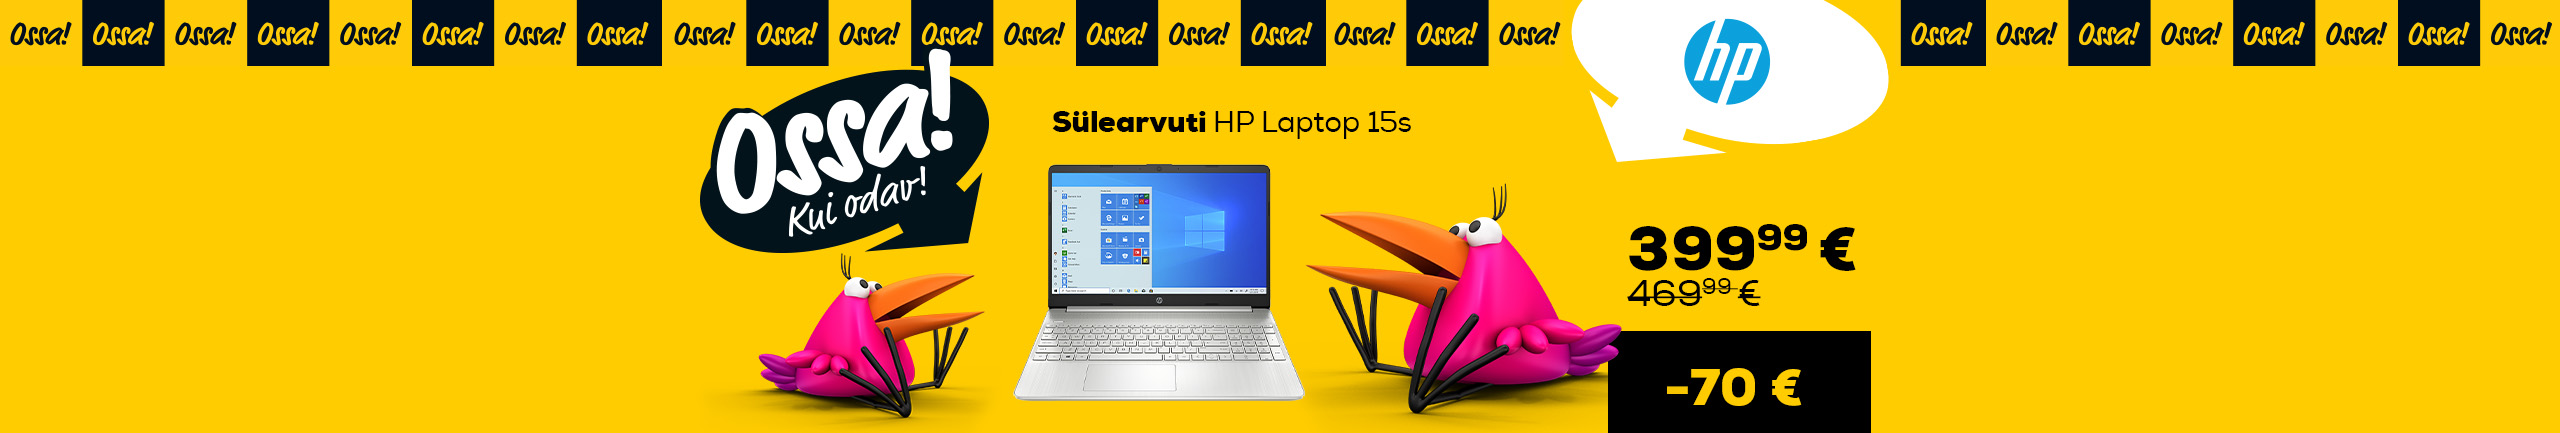 Ossa! Winter 2022 HP Laptop 15s